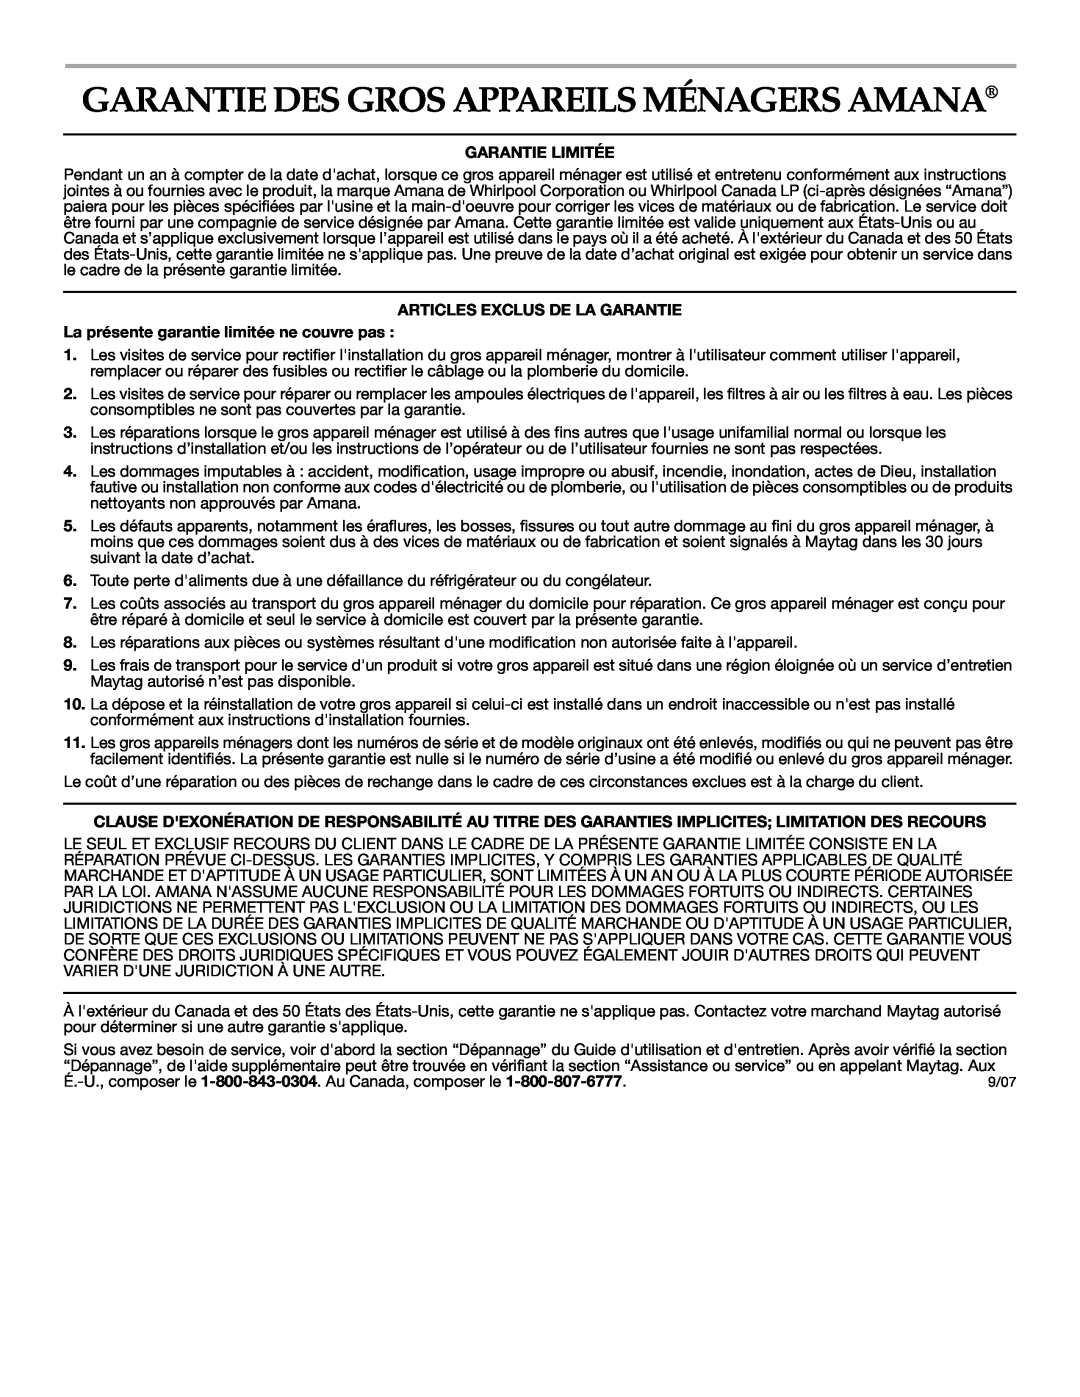 Amana AER5722CAS manual Garantie Des Gros Appareils Ménagers Amana, Garantie Limitée, Articles Exclus De La Garantie 